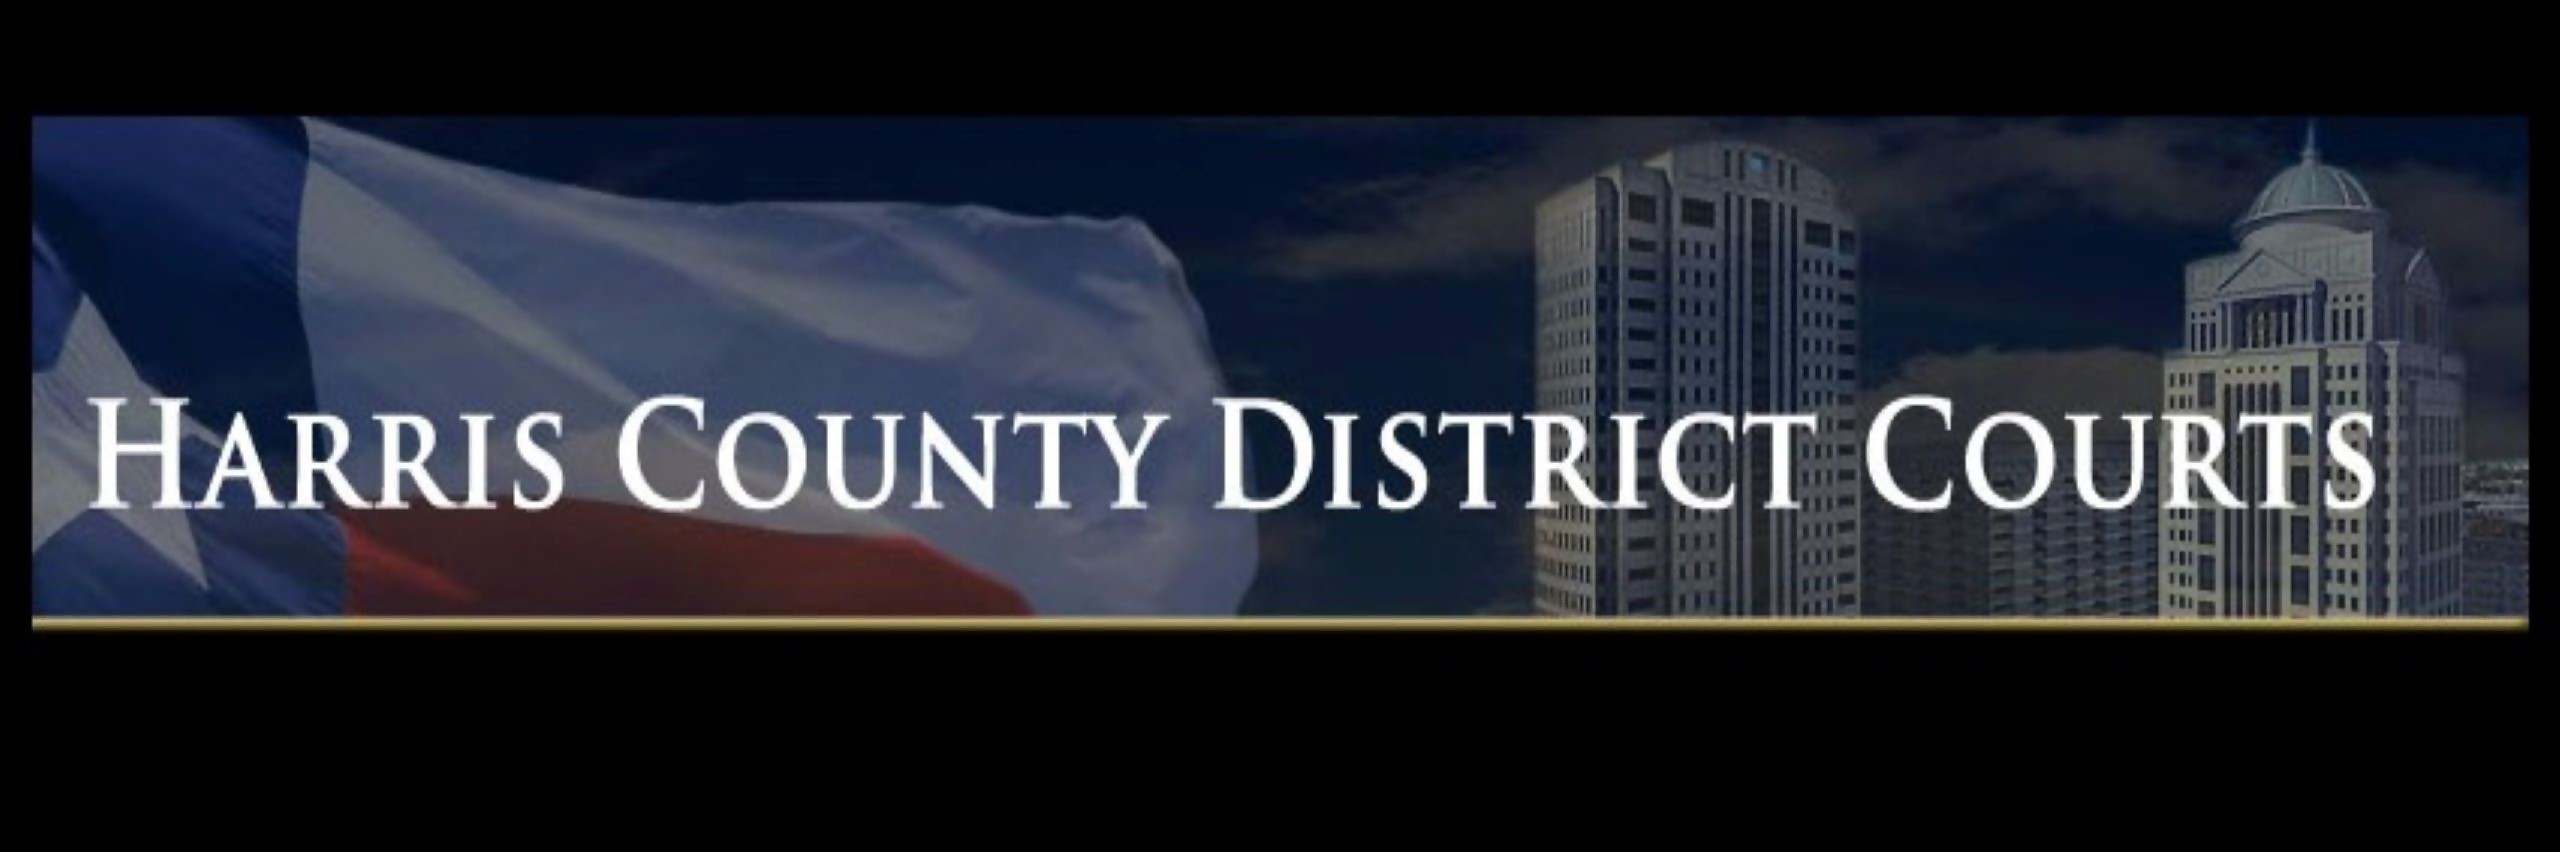 185th District Court - Live Stream